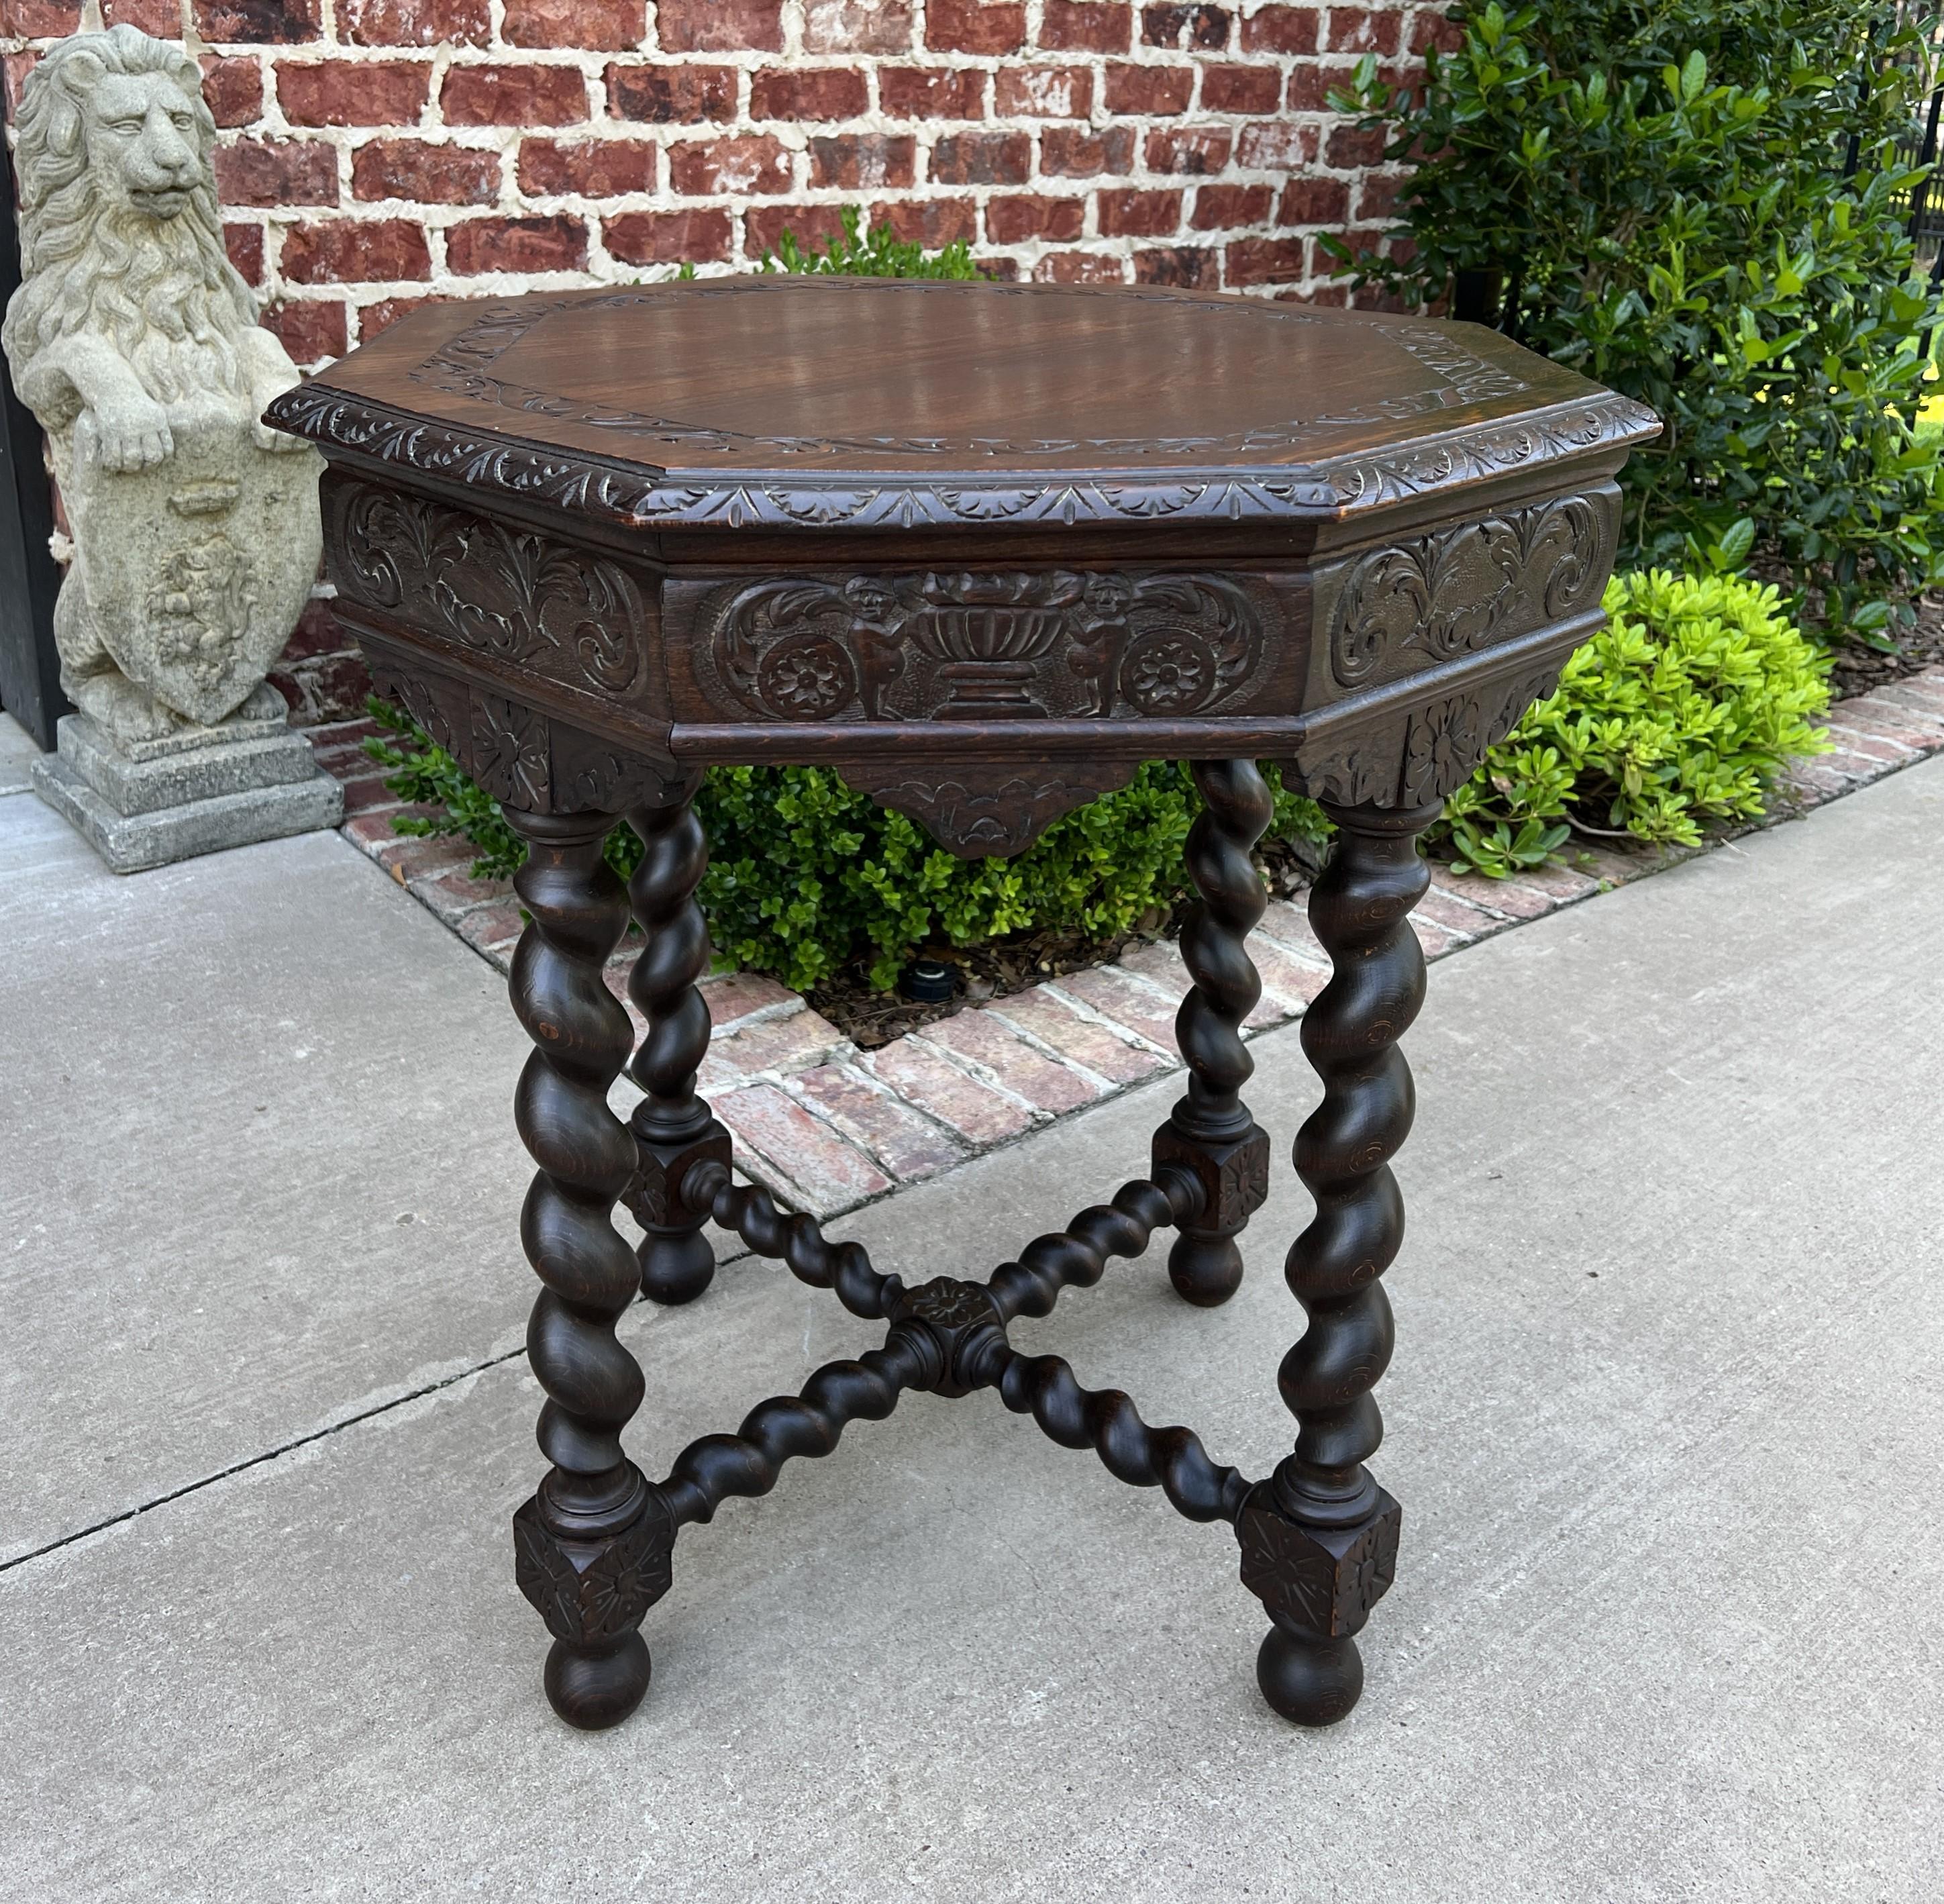 Antique French Table Barley Twist Octagonal Renaissance Revival Oak Carved 19thc For Sale 4